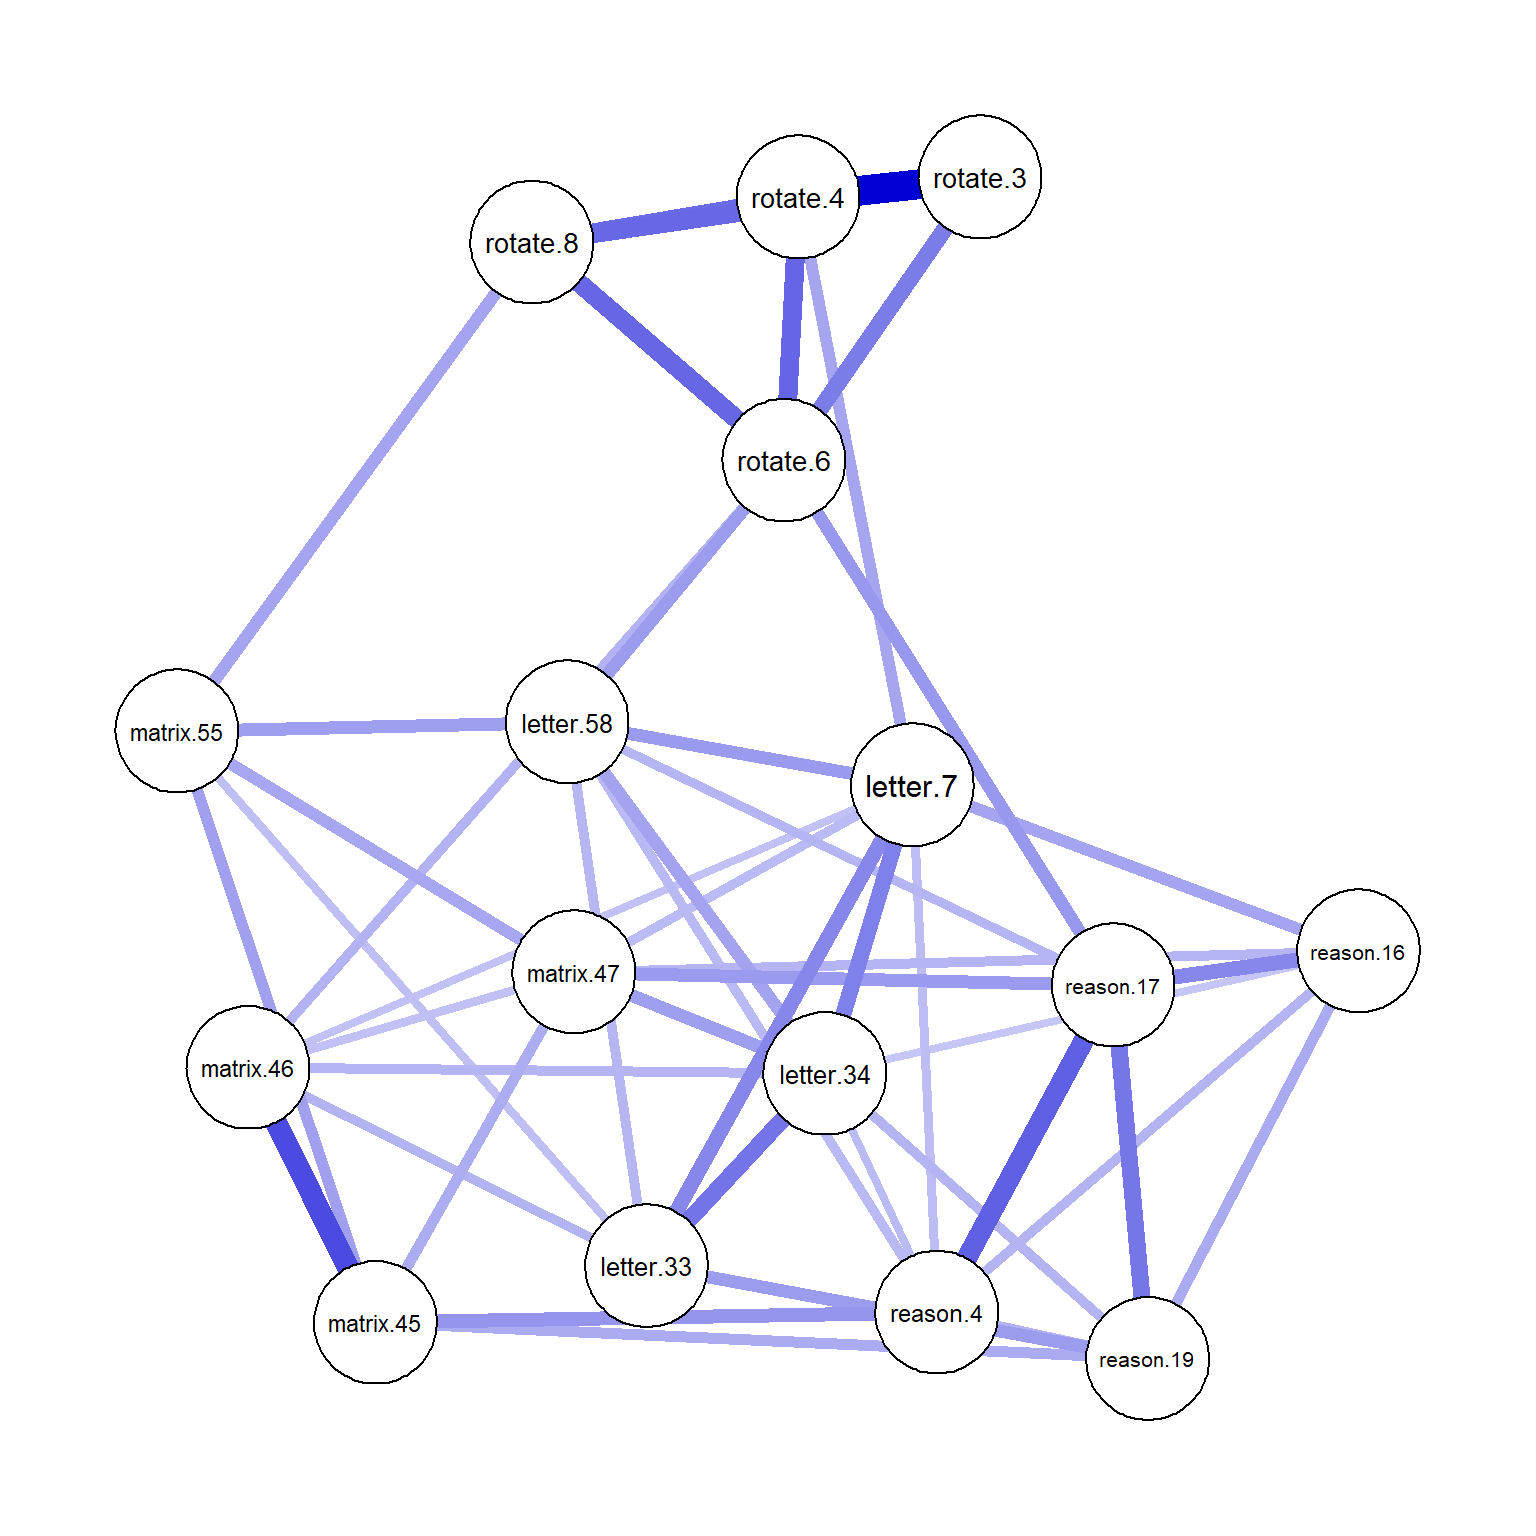 Network plot using **qgraph**